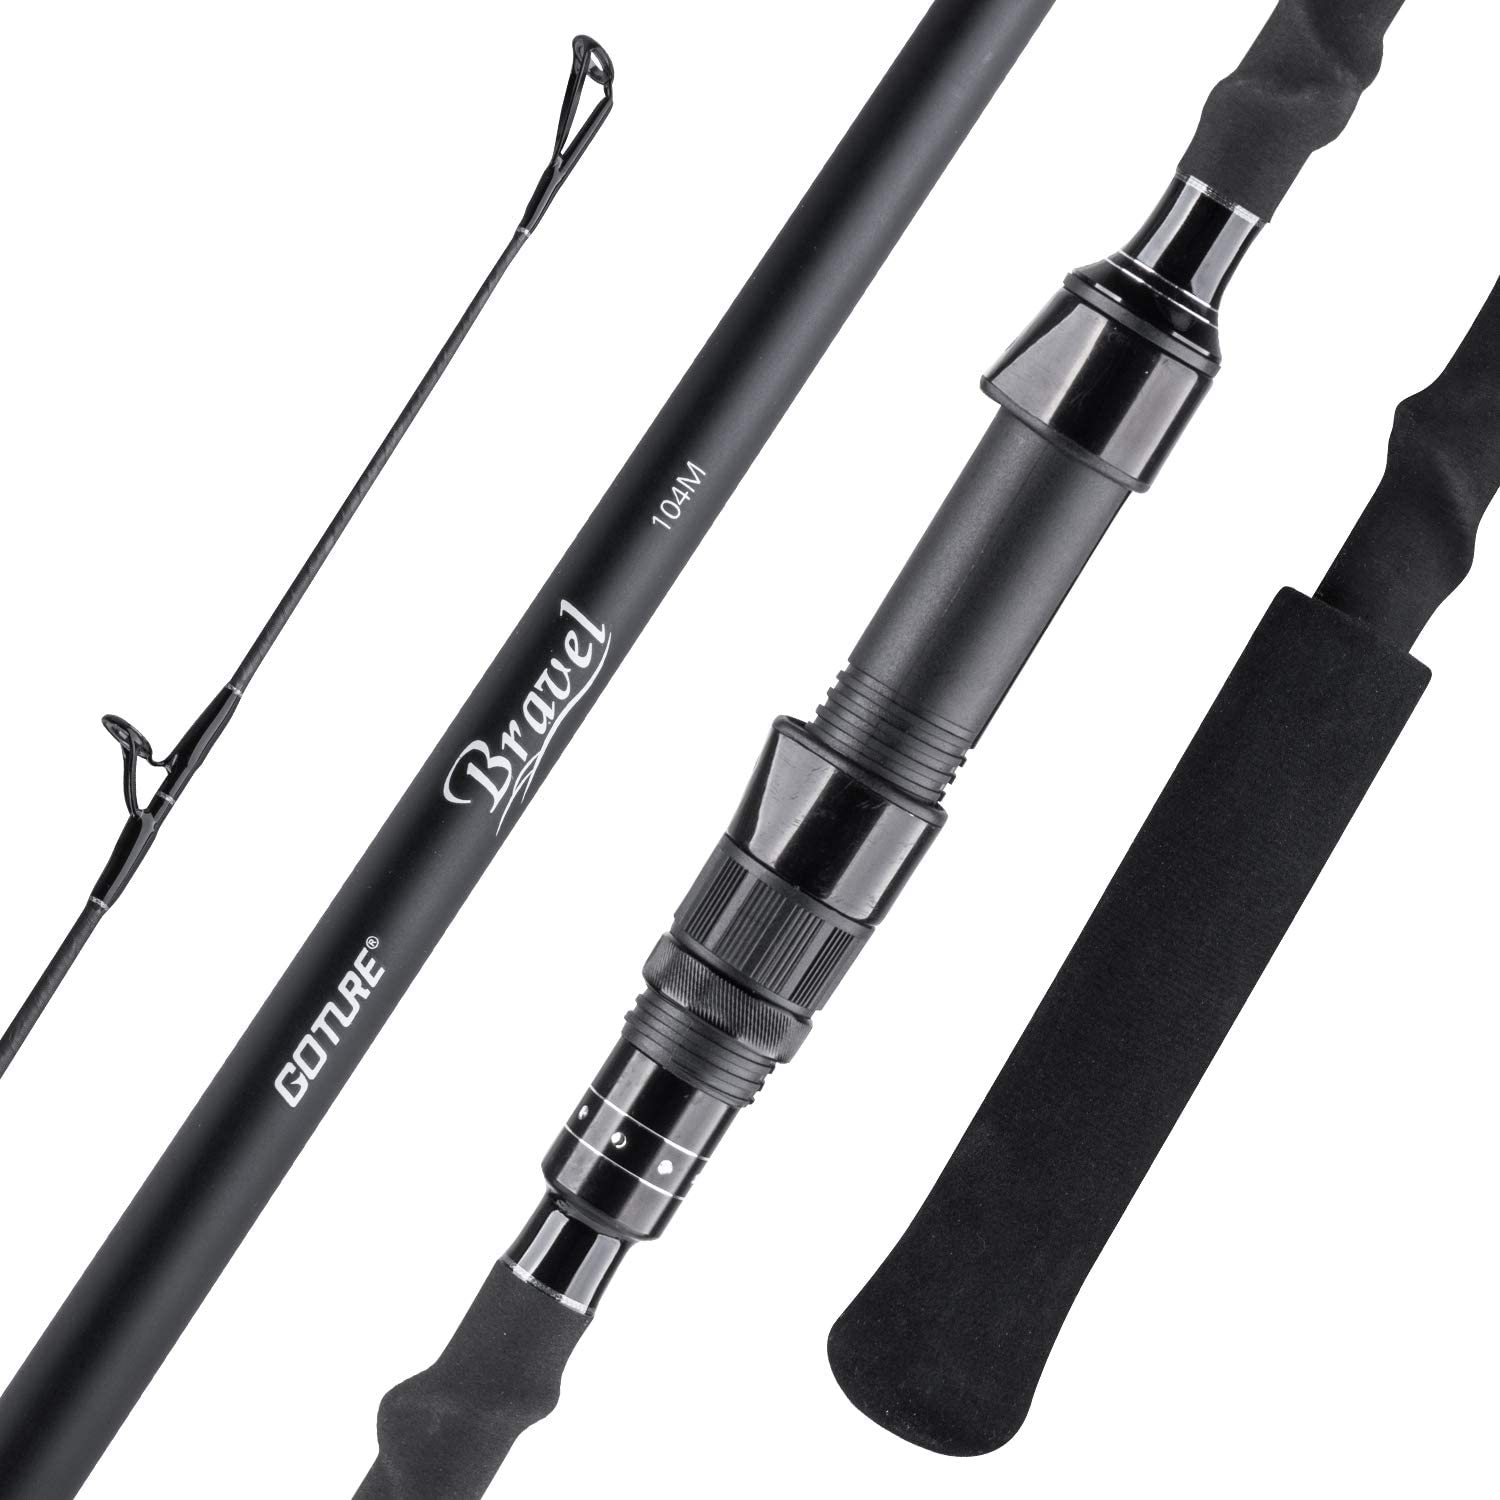 Flexible Fishing Rods Premium Fishing Pole Comfortable Handle